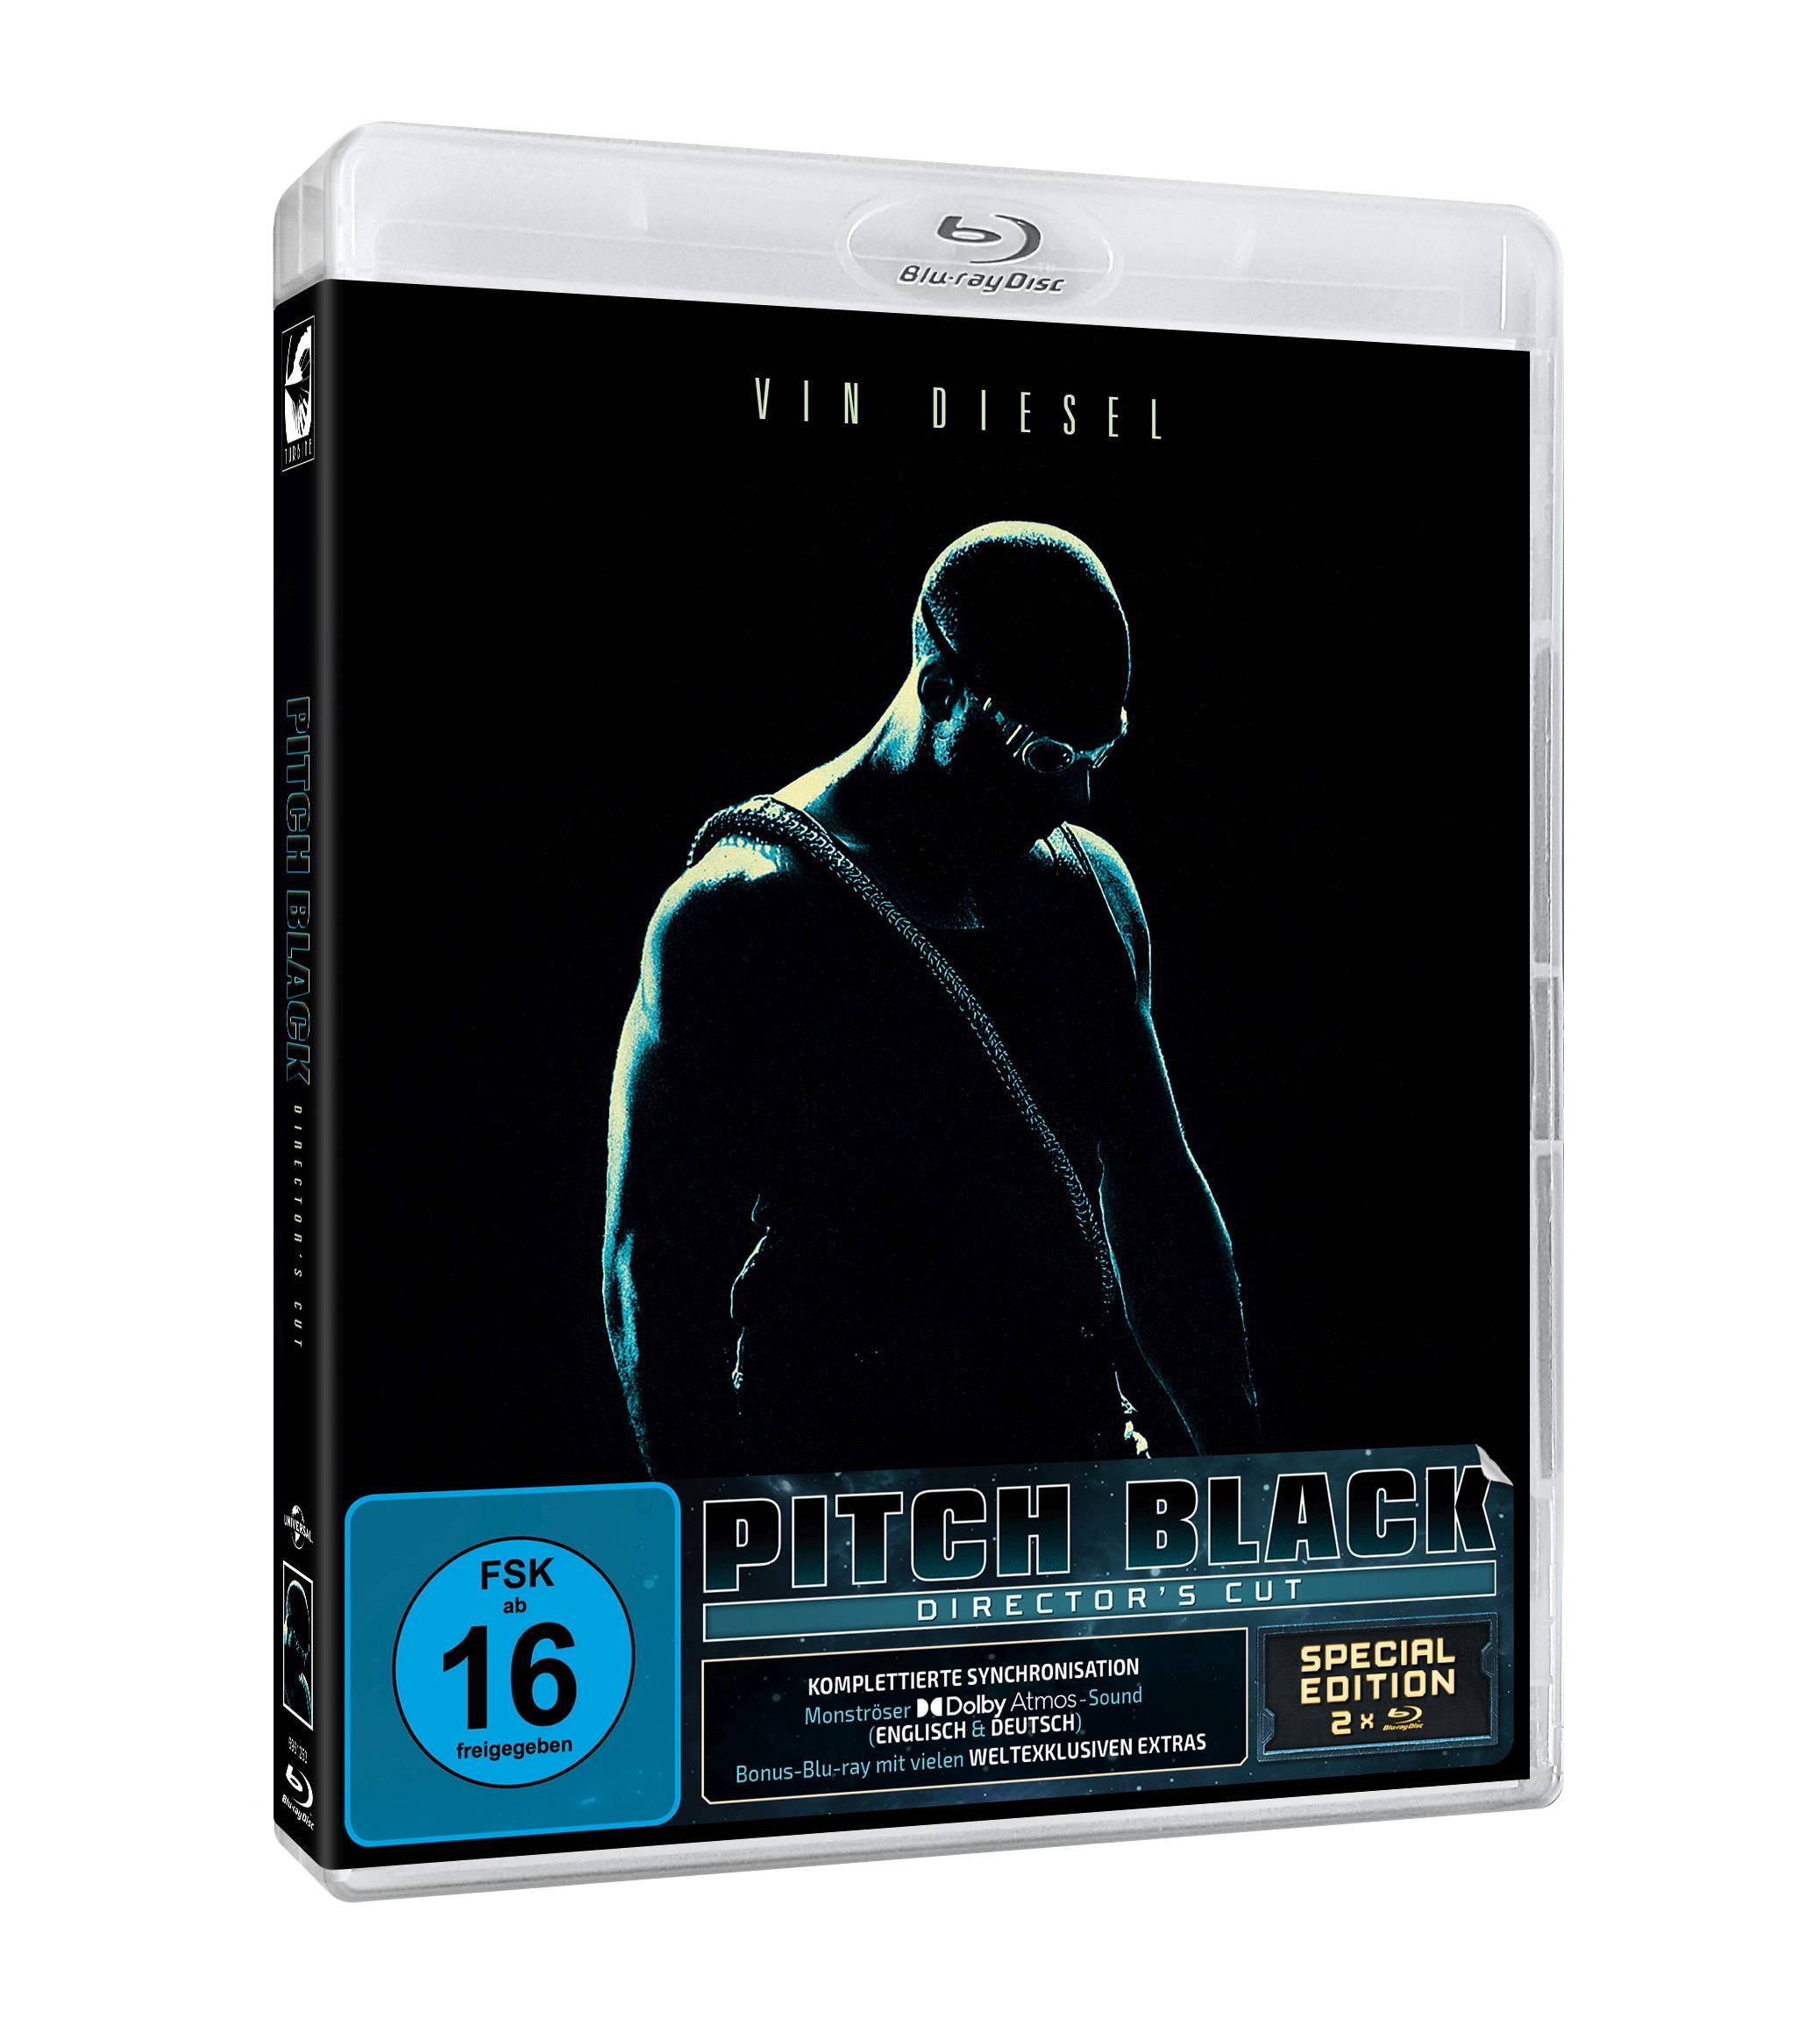 Pitch Black (Director's Cut) | 2-Disc Special Edition (Blu-ray + Bonus-Blu-ray)